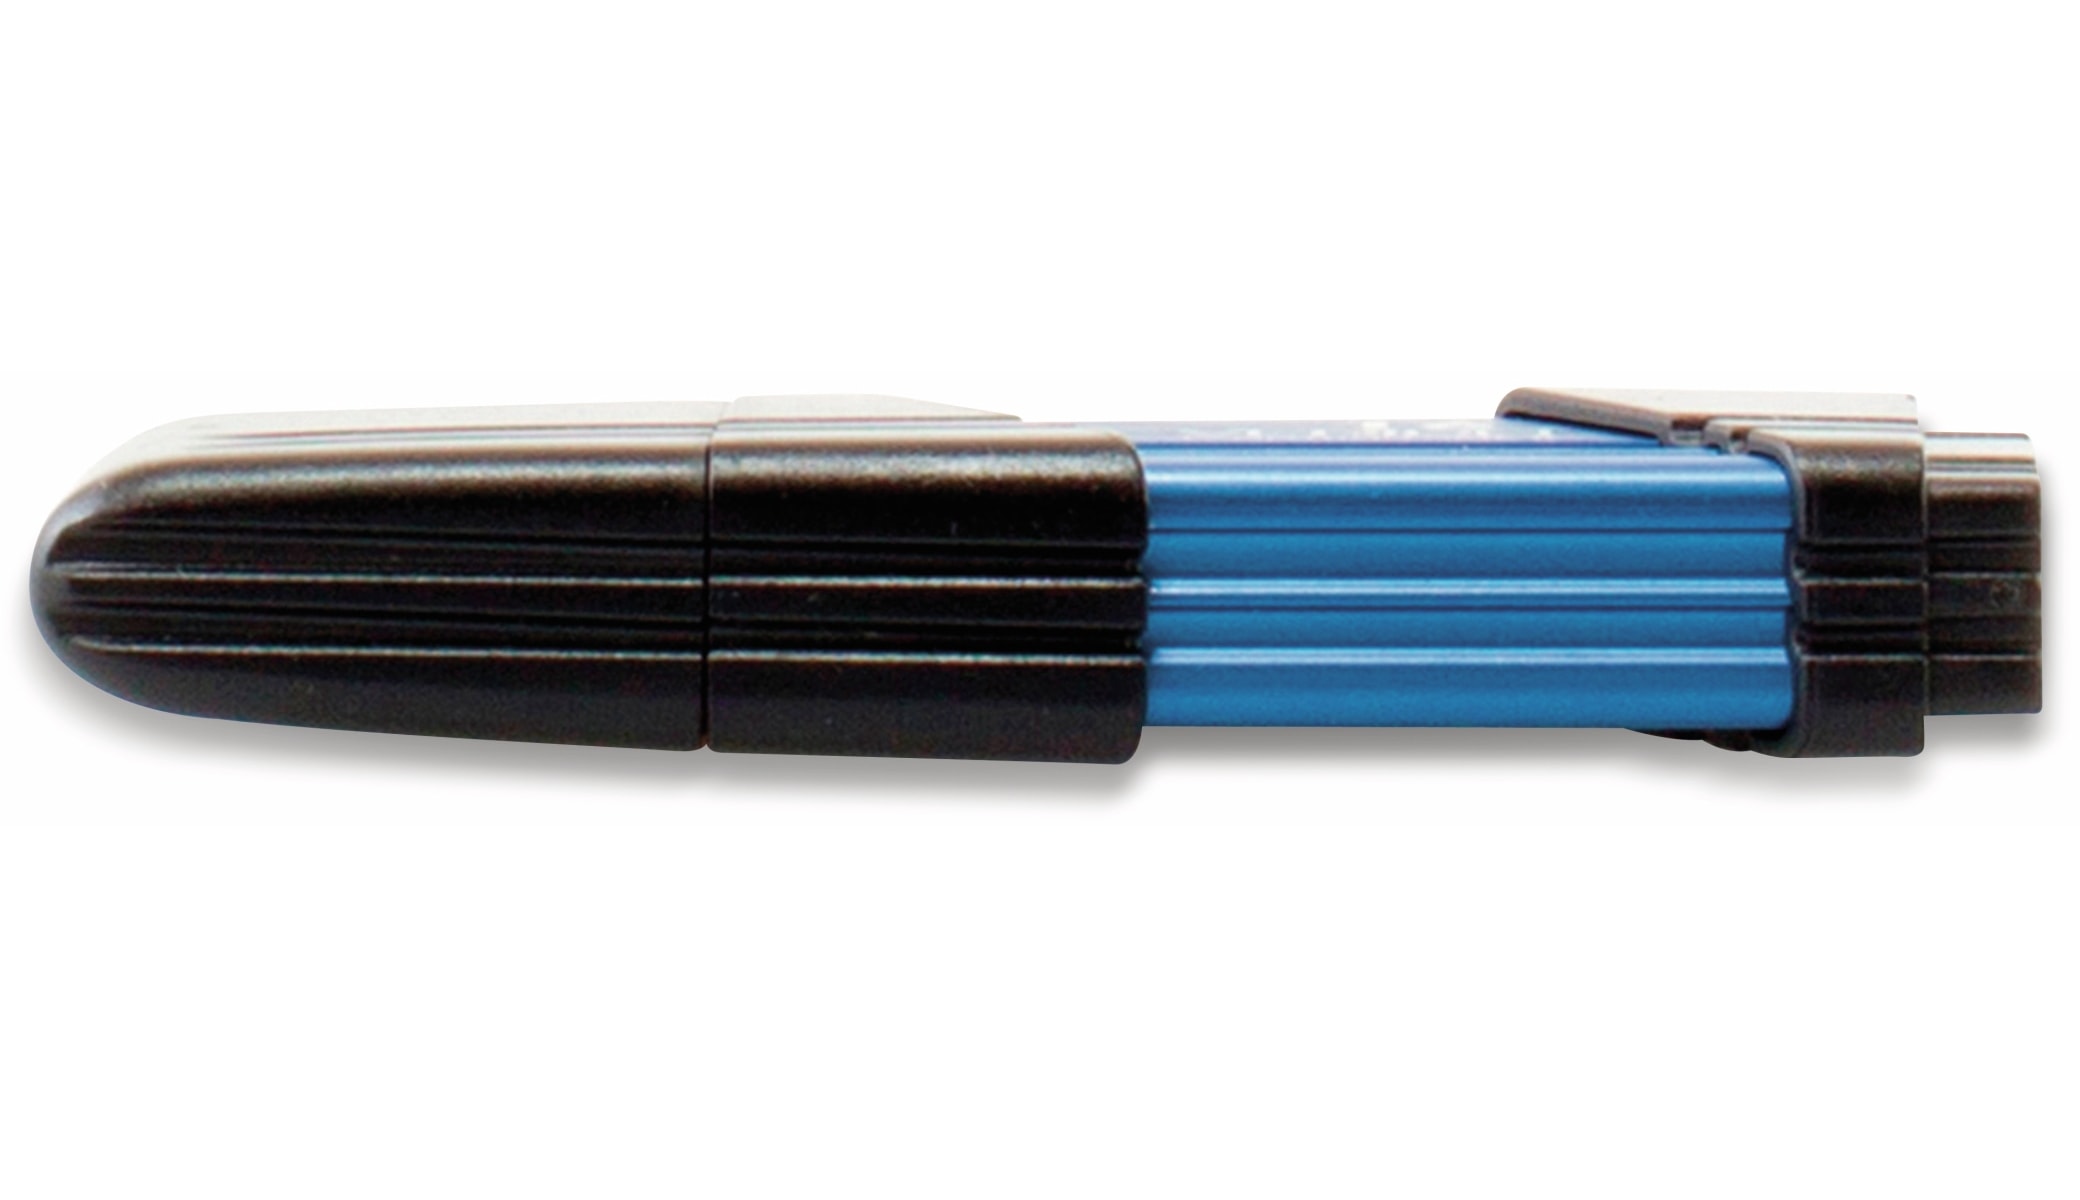 verico USB3.0 Stick Evolution MK-II, 128 GB, blau